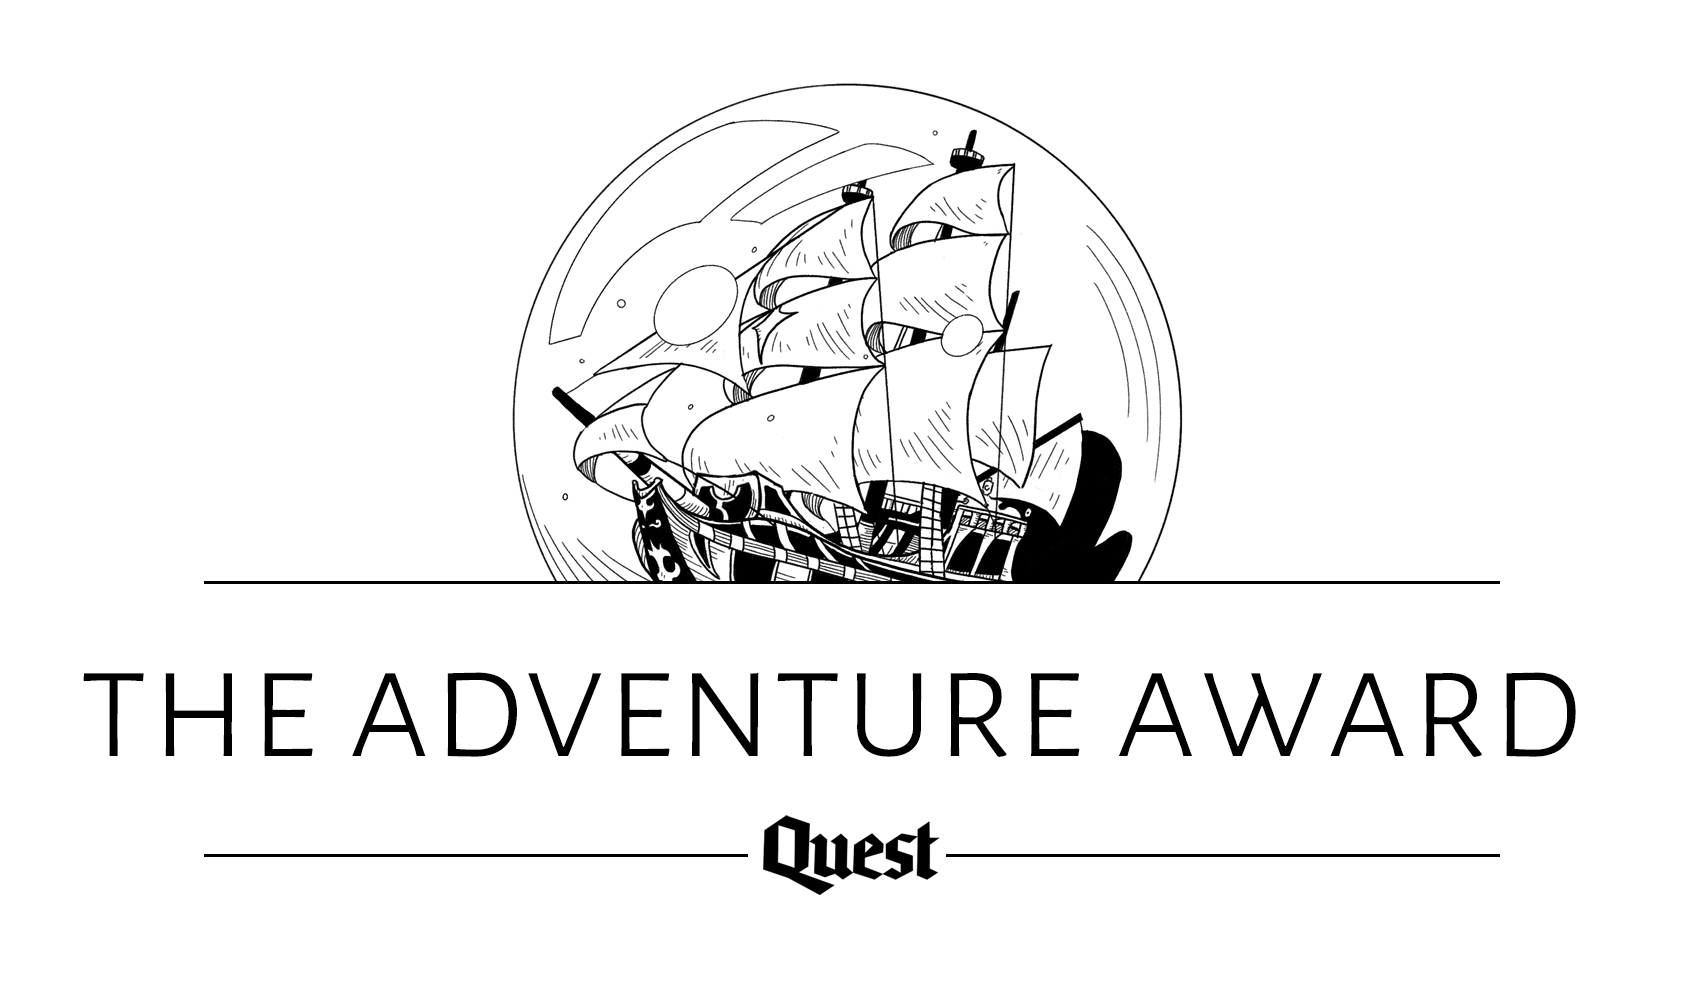 The Adventure Award